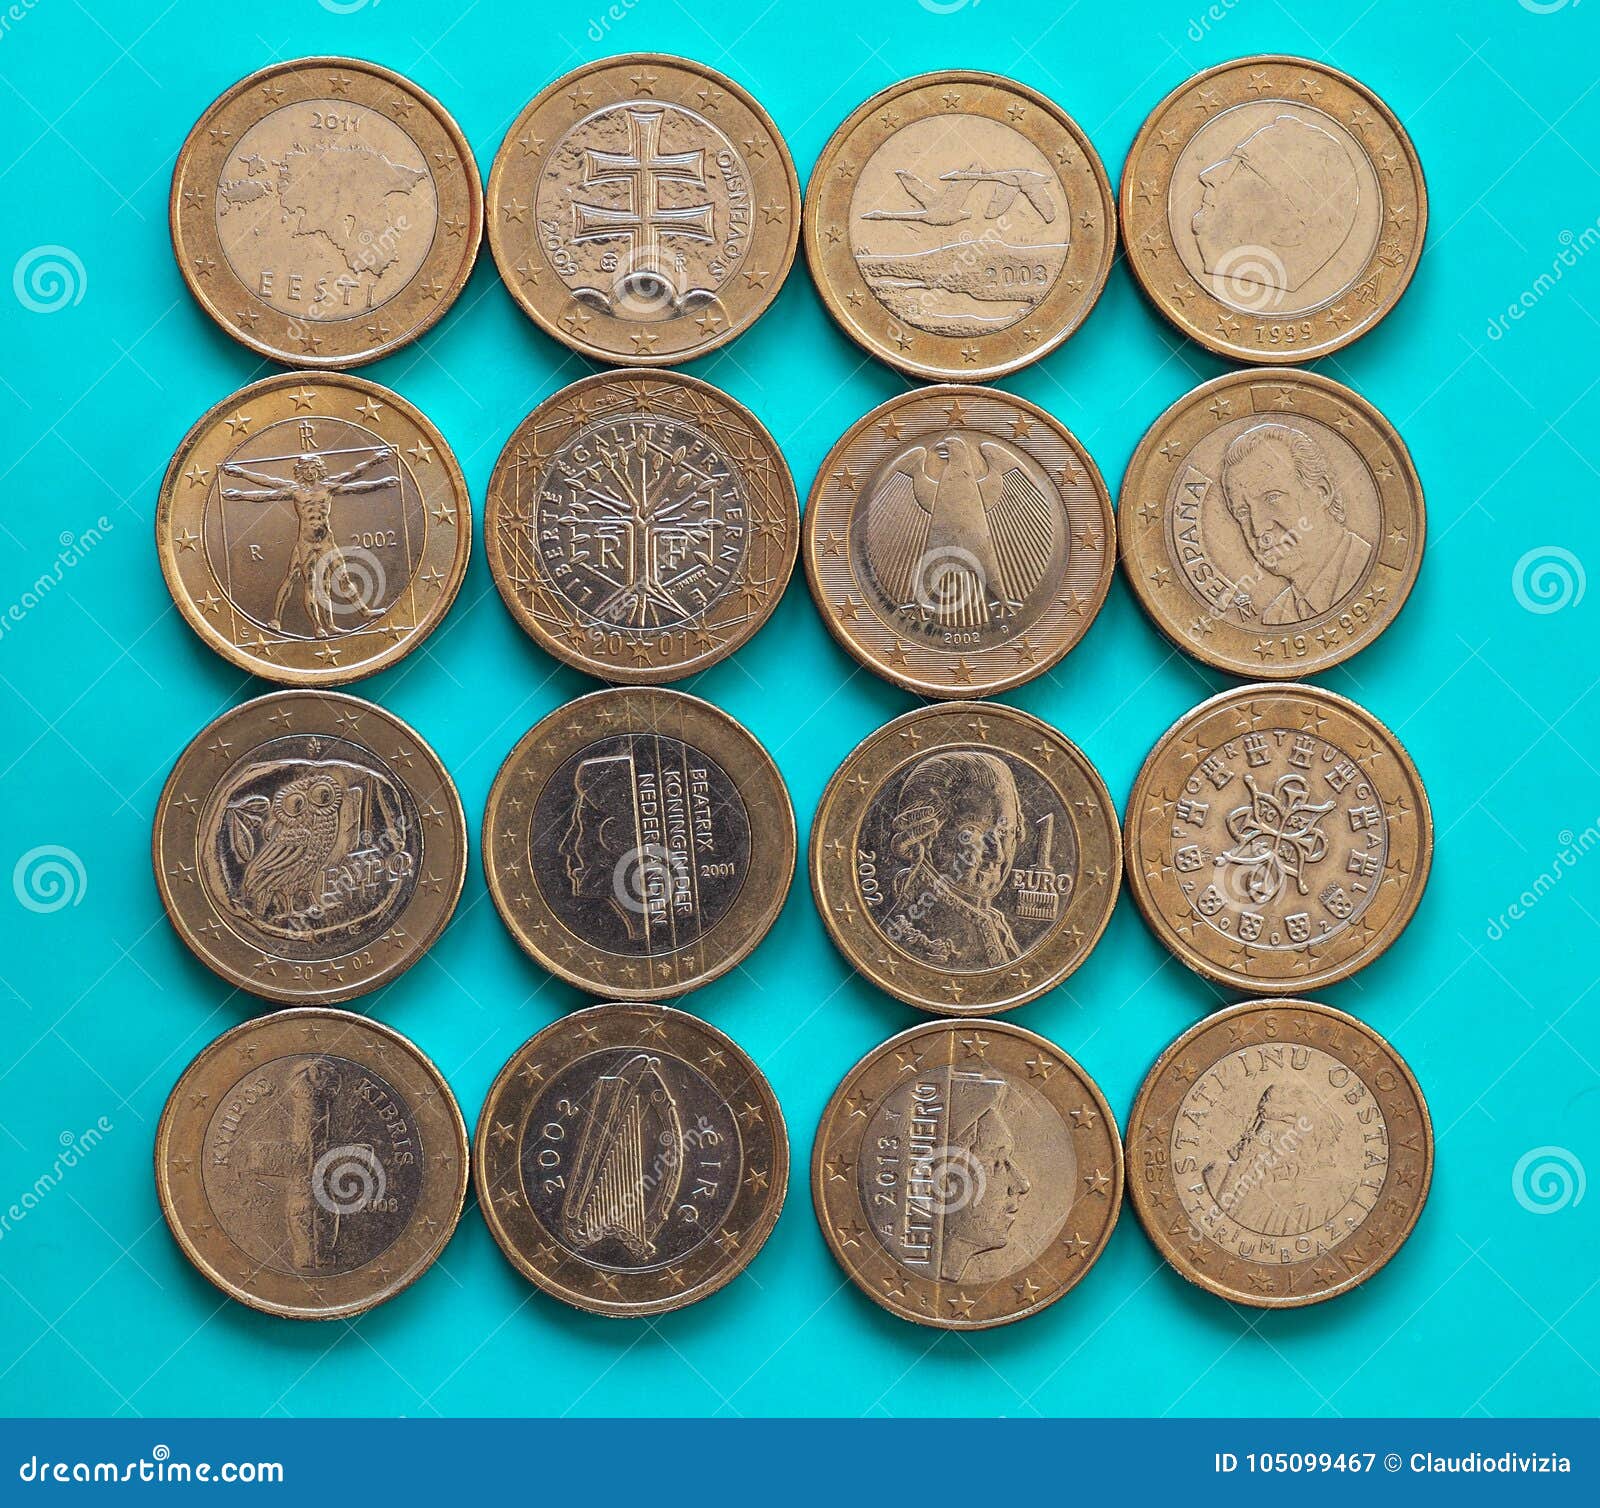 1 Euro Coin, European Union Stock Image - Image of green, euros